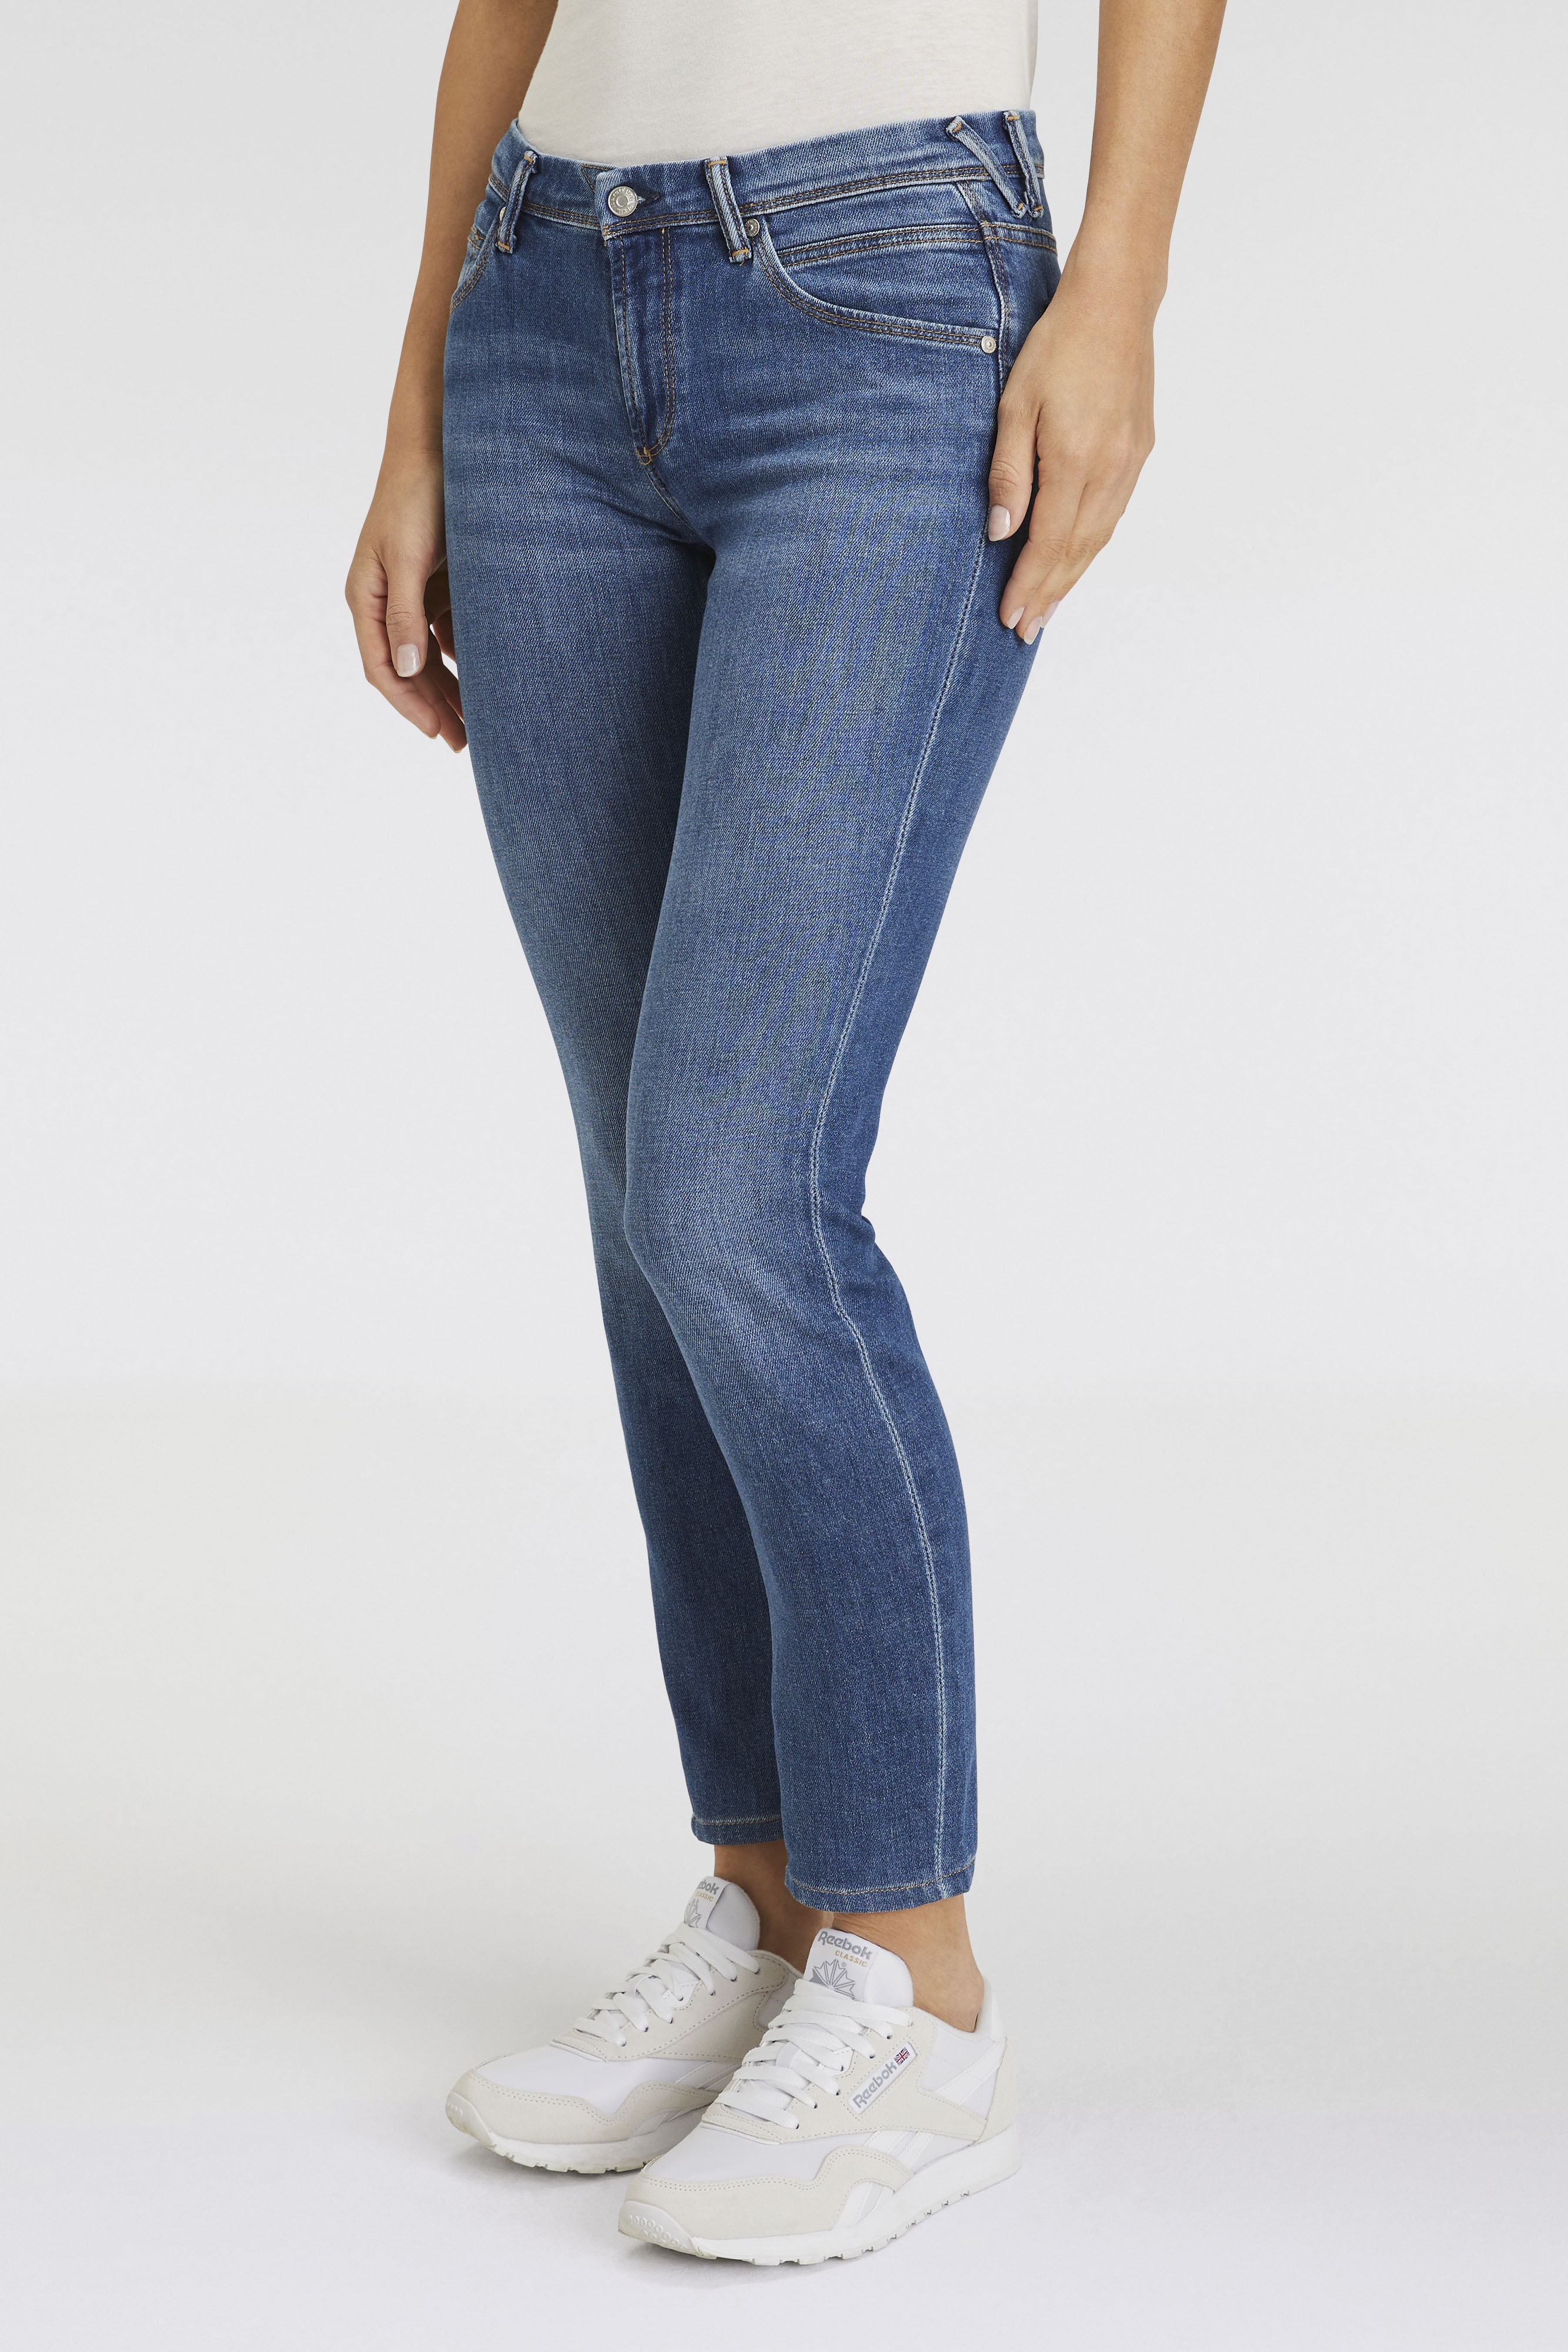 Skinny-fit-Jeans MARC O'POLO DENIM "Alva" Gr. 27, Länge 32, blau (denim blue) Damen Jeans Röhrenjeans